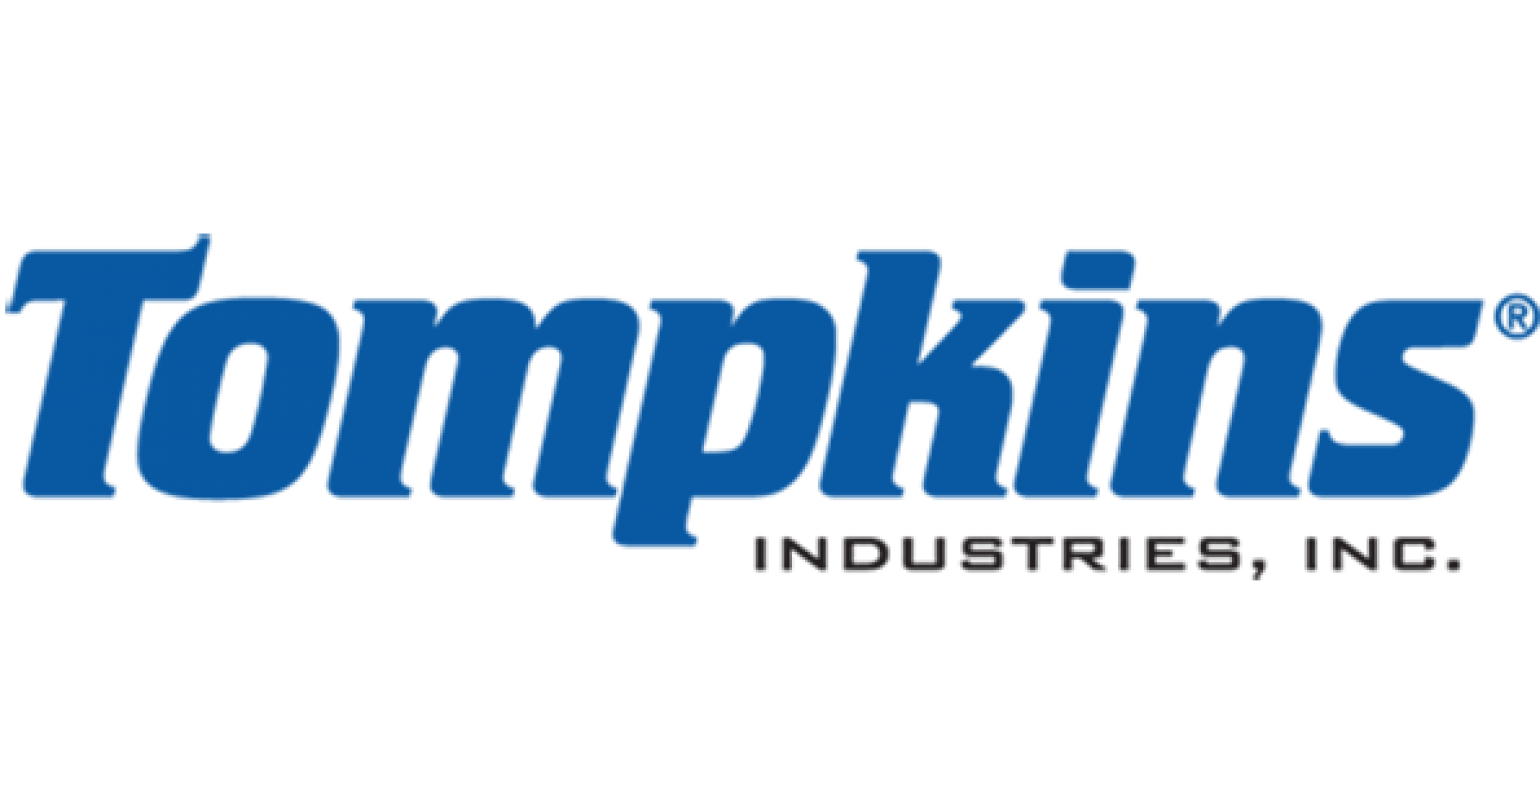 Tompkins Logo - Tompkins Industries to Distribute ContiTech Parts | Hydraulics ...